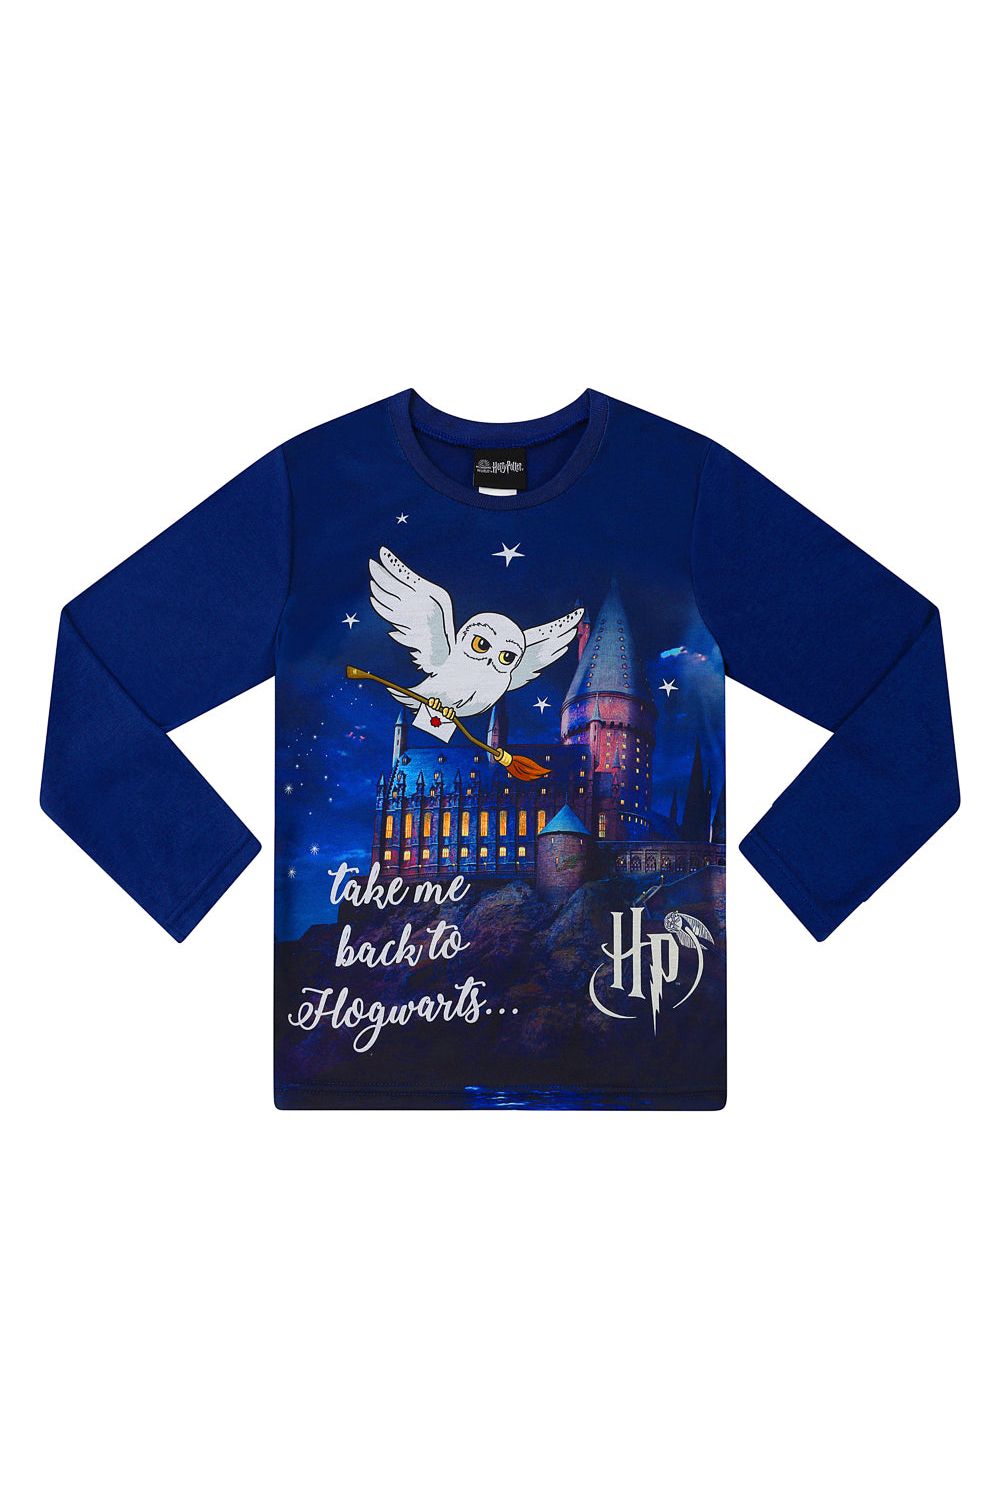 Girls Harry Potter Pyjamas Hedwig Take Me Back to Hogwarts Pjs 6 to 12 Years Blu - Pyjamas.com